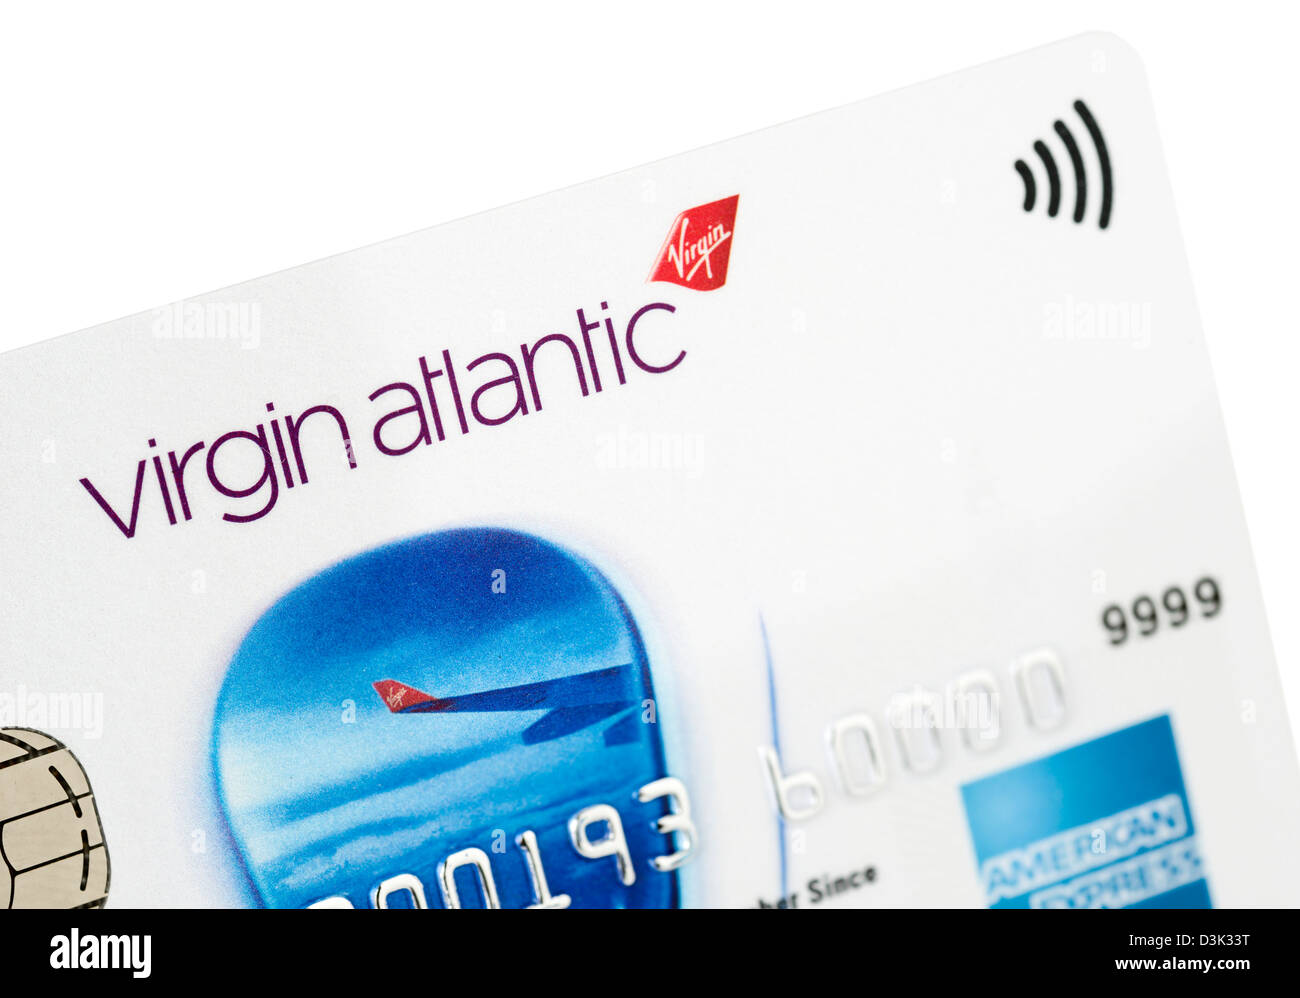 Virgin Atlantic Airwasy der Marke American Express Kreditkarte Stockfoto